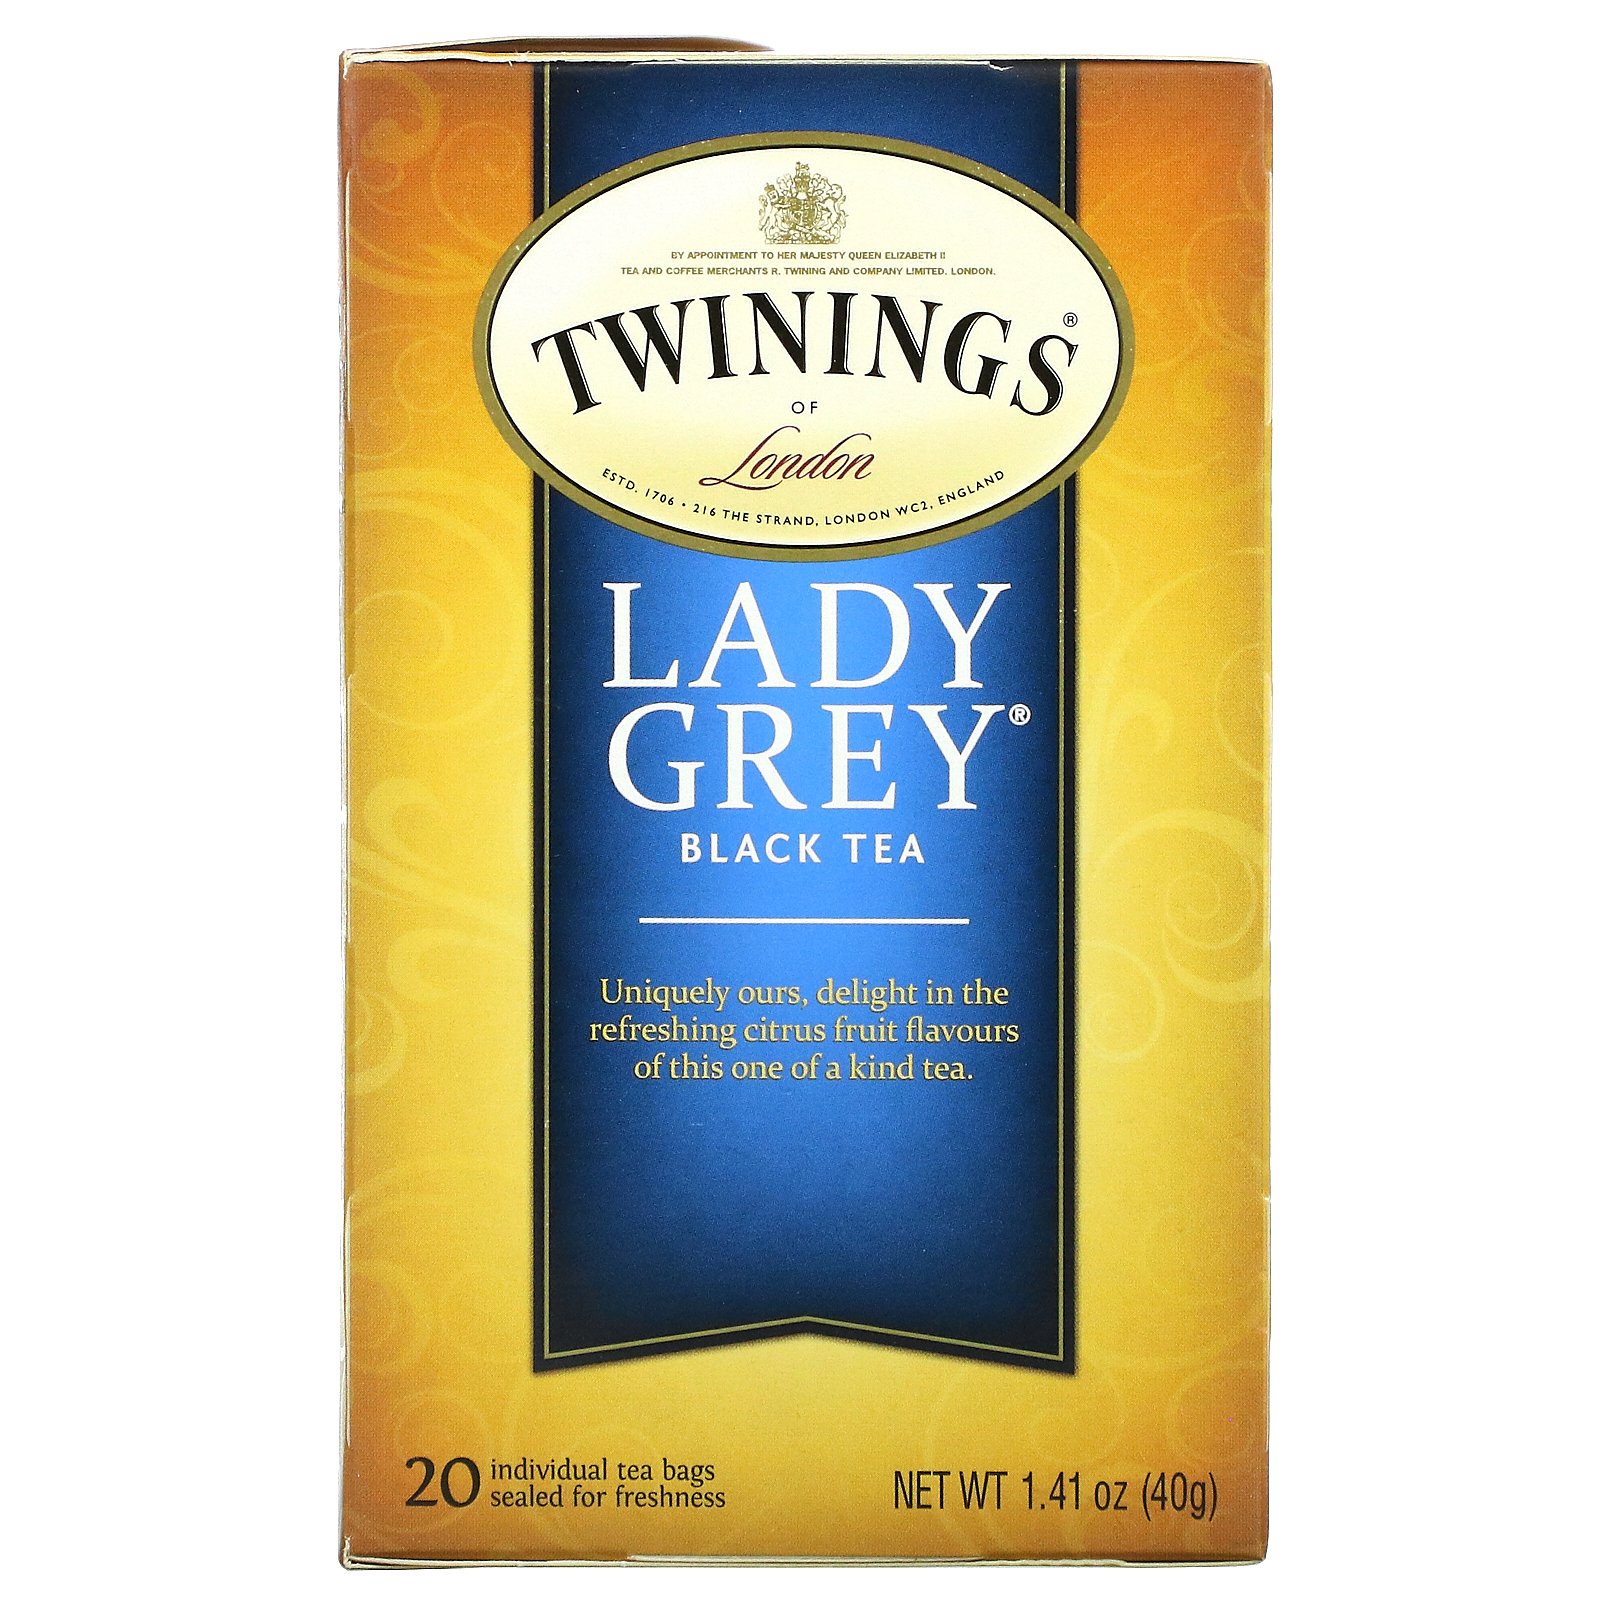 Twinings 日本産 Lady Grey レディグレイ 40g 紅茶 [再販ご予約限定送料無料] ティーバッグ20袋 1.41オンス